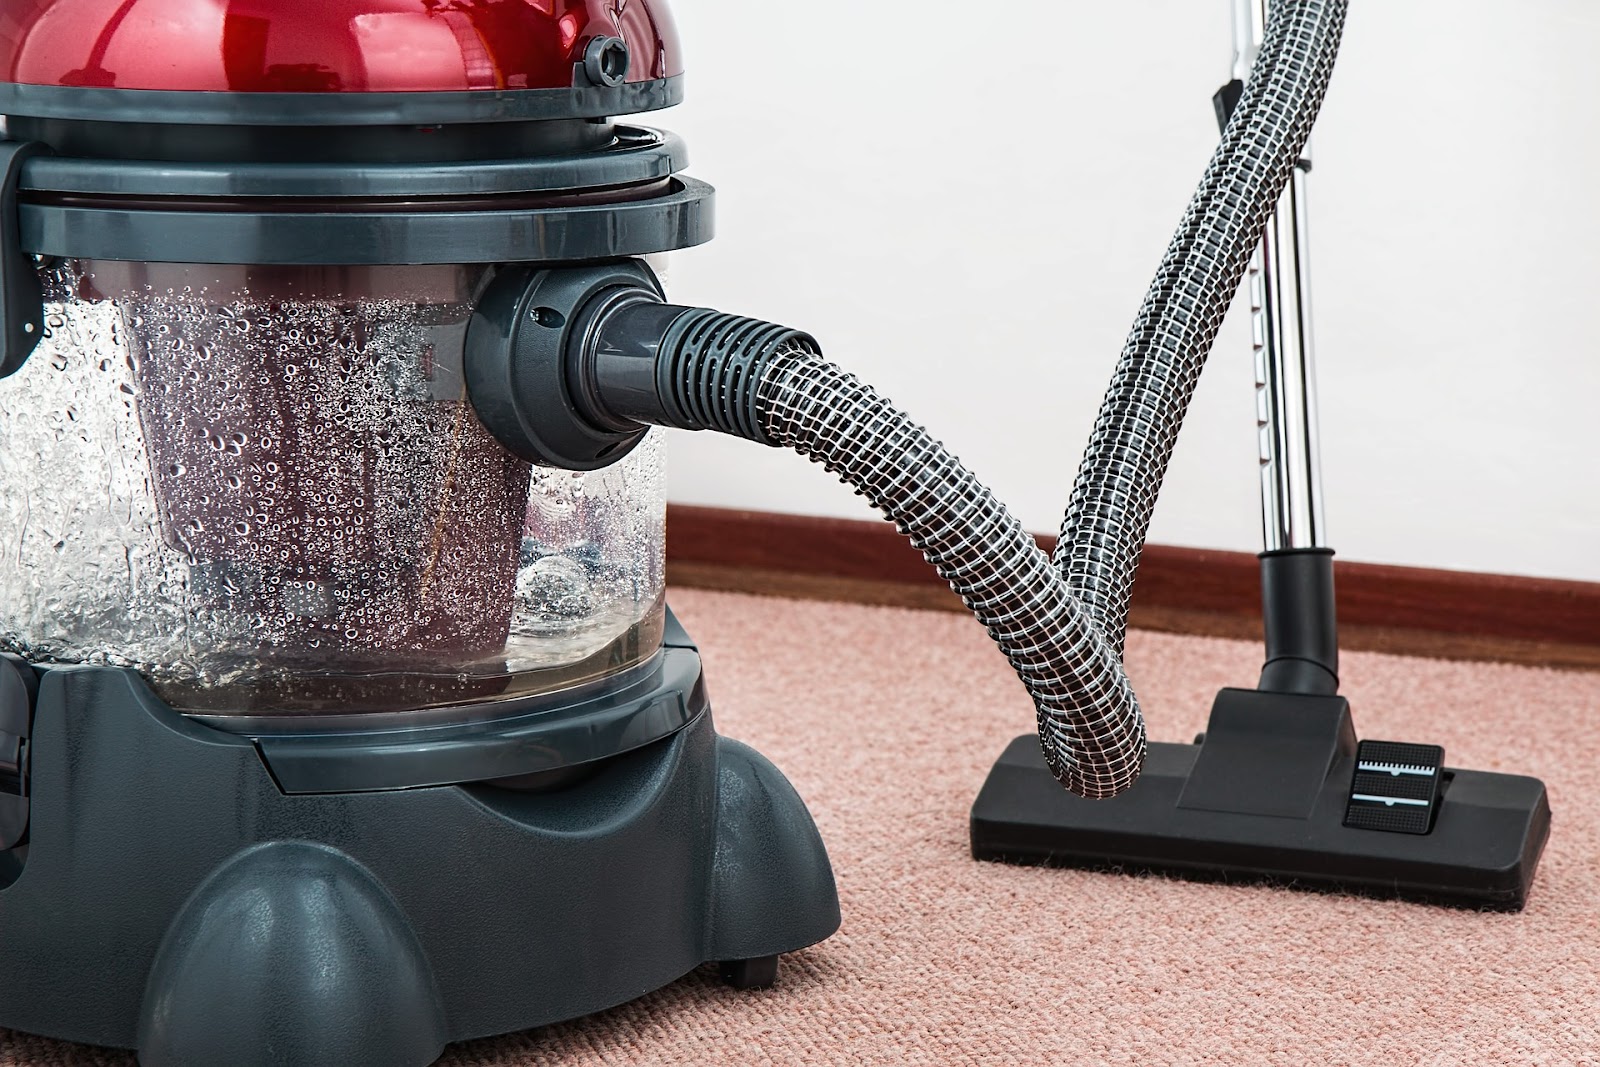 A steam cleaner vacuum.